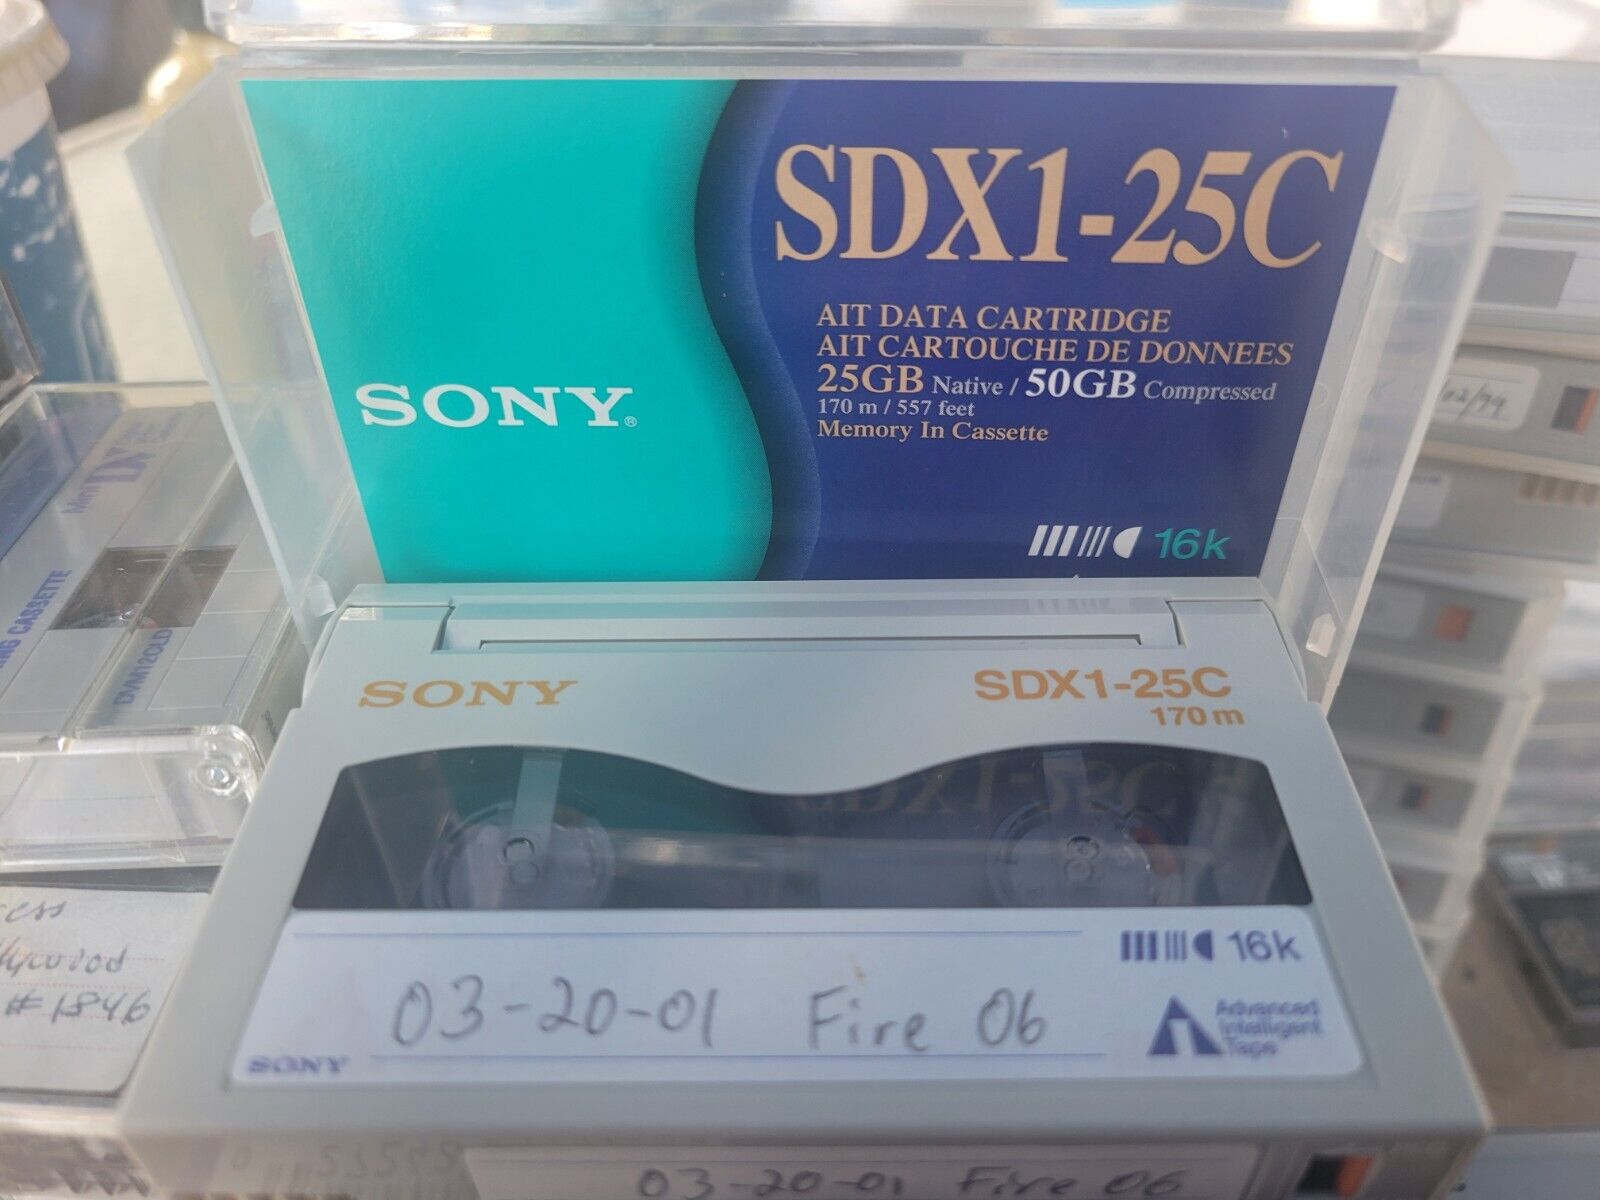 Lot of 5 Sony SDX1-25C Data Cartridges (25GB Native, 50GB Compressed) 170m 557'